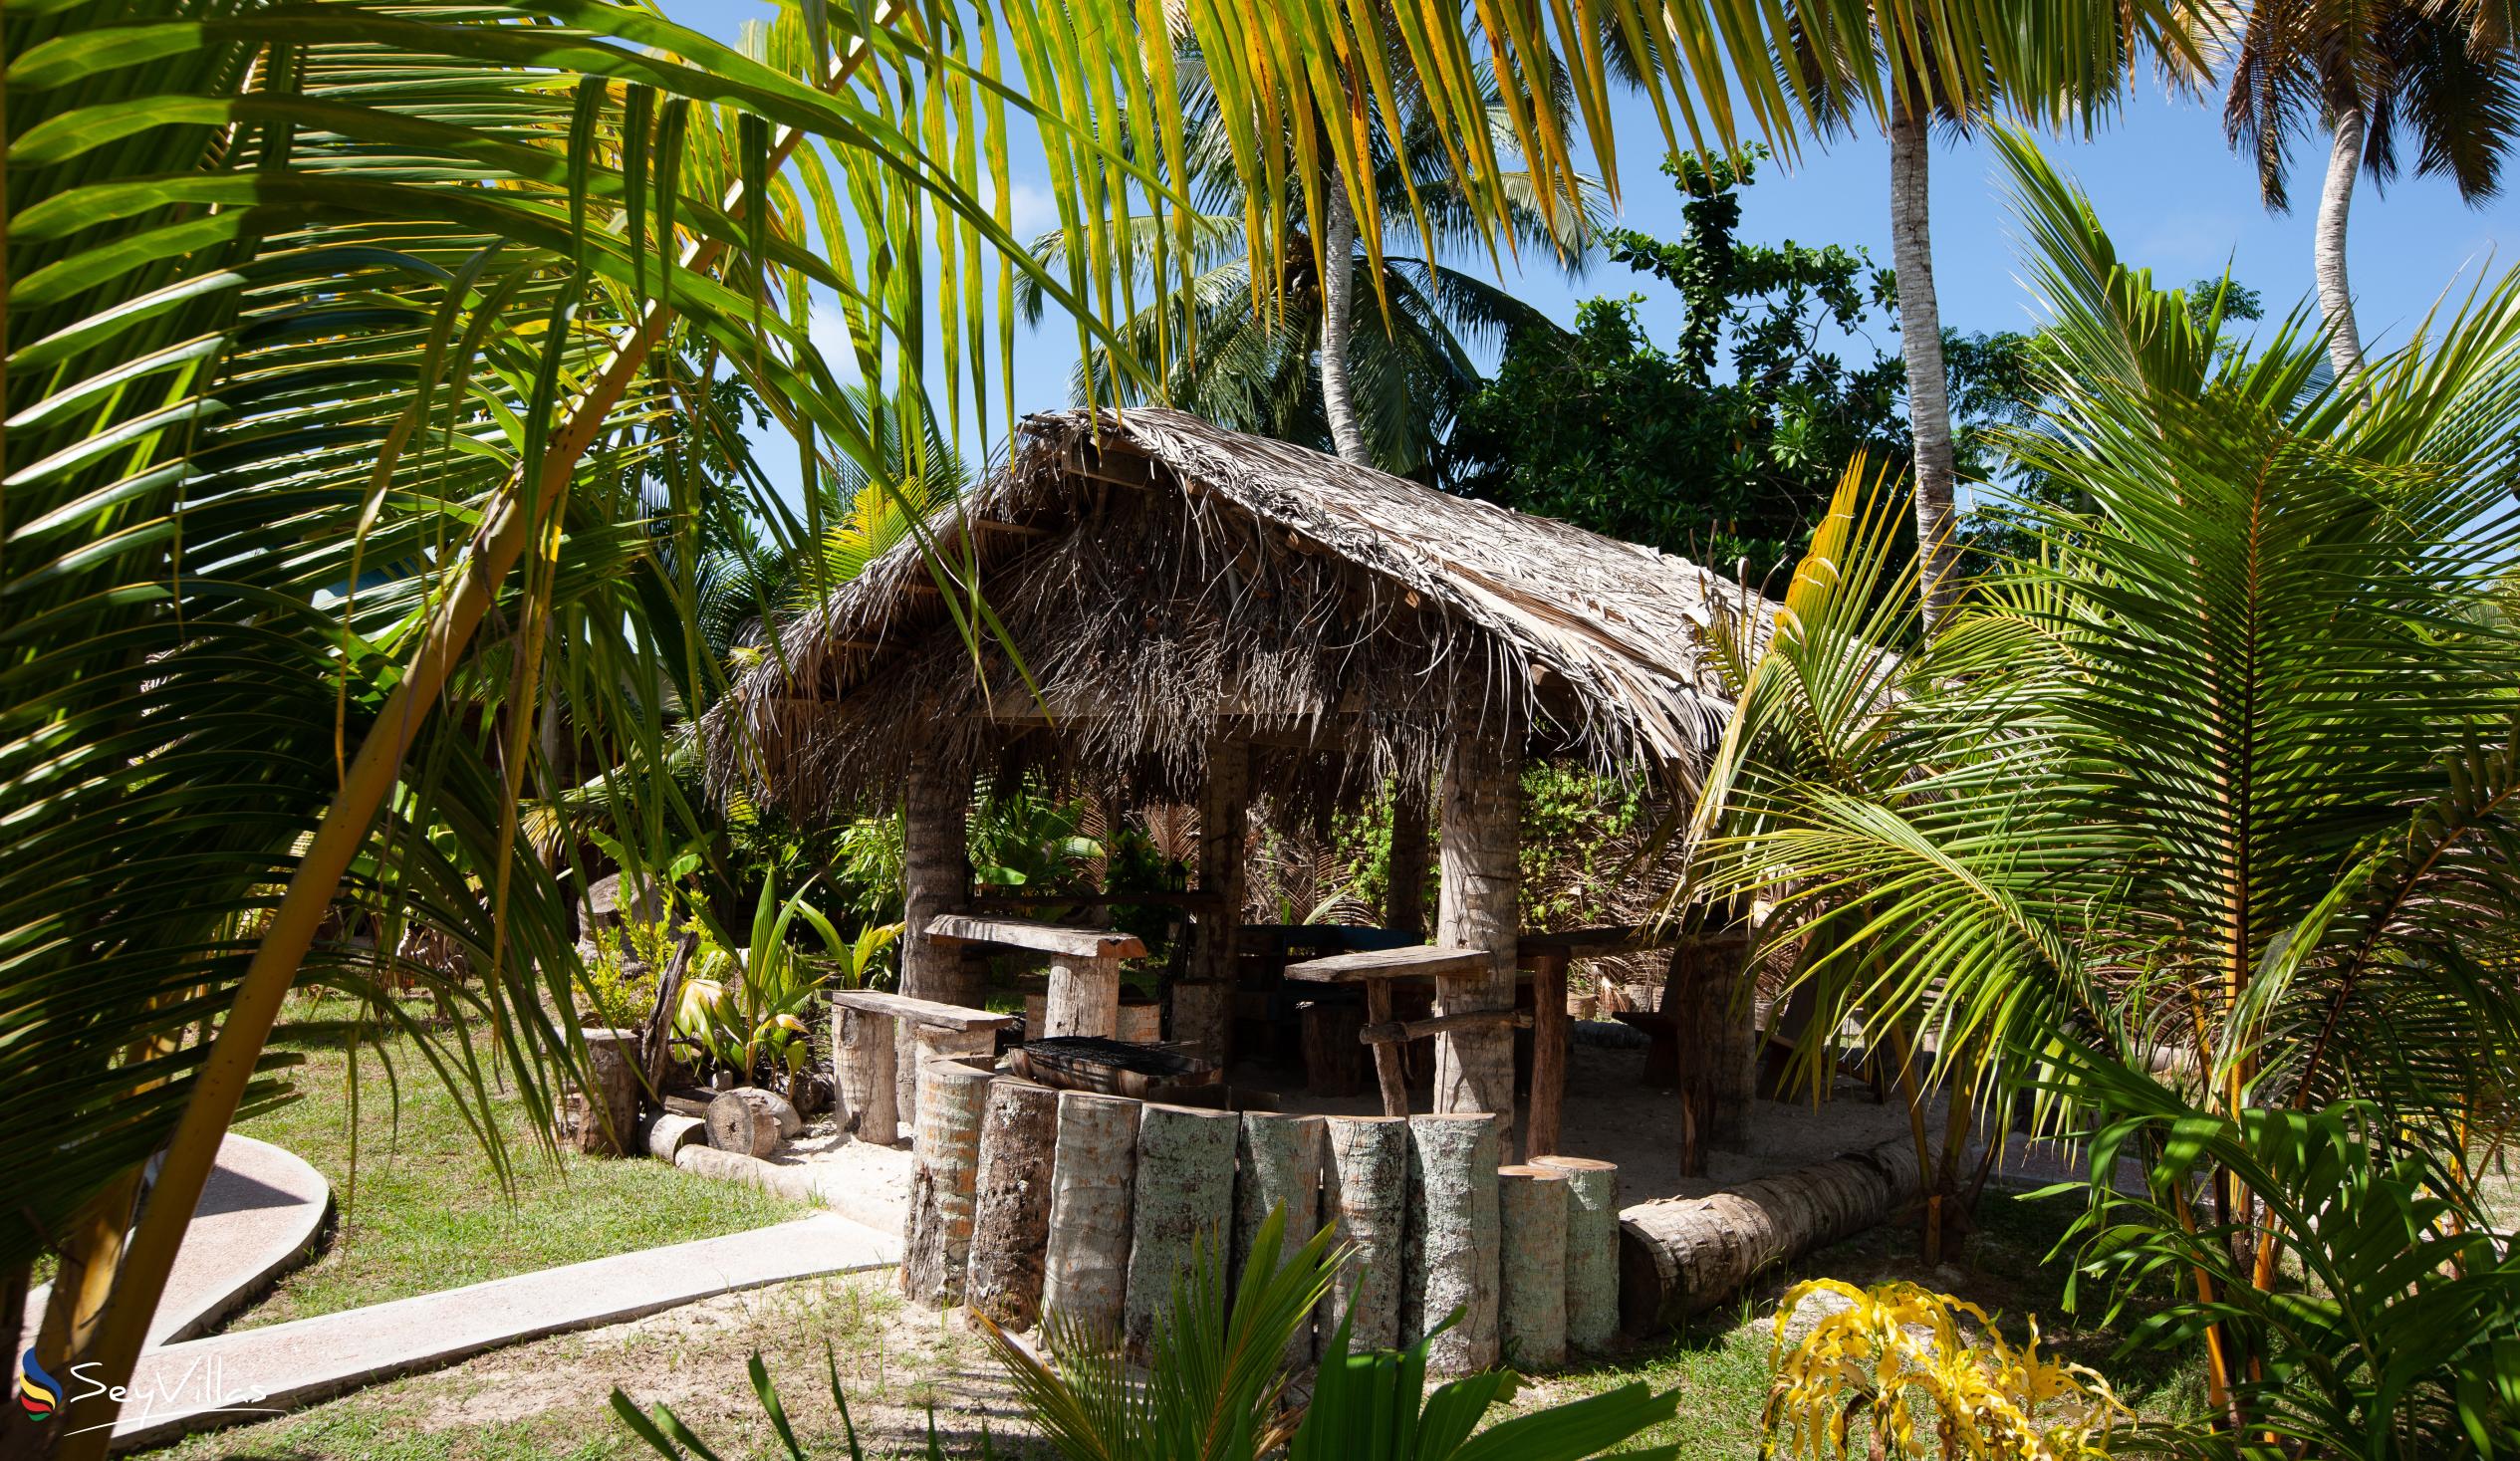 Foto 11: Coco de Mahi - Aussenbereich - La Digue (Seychellen)